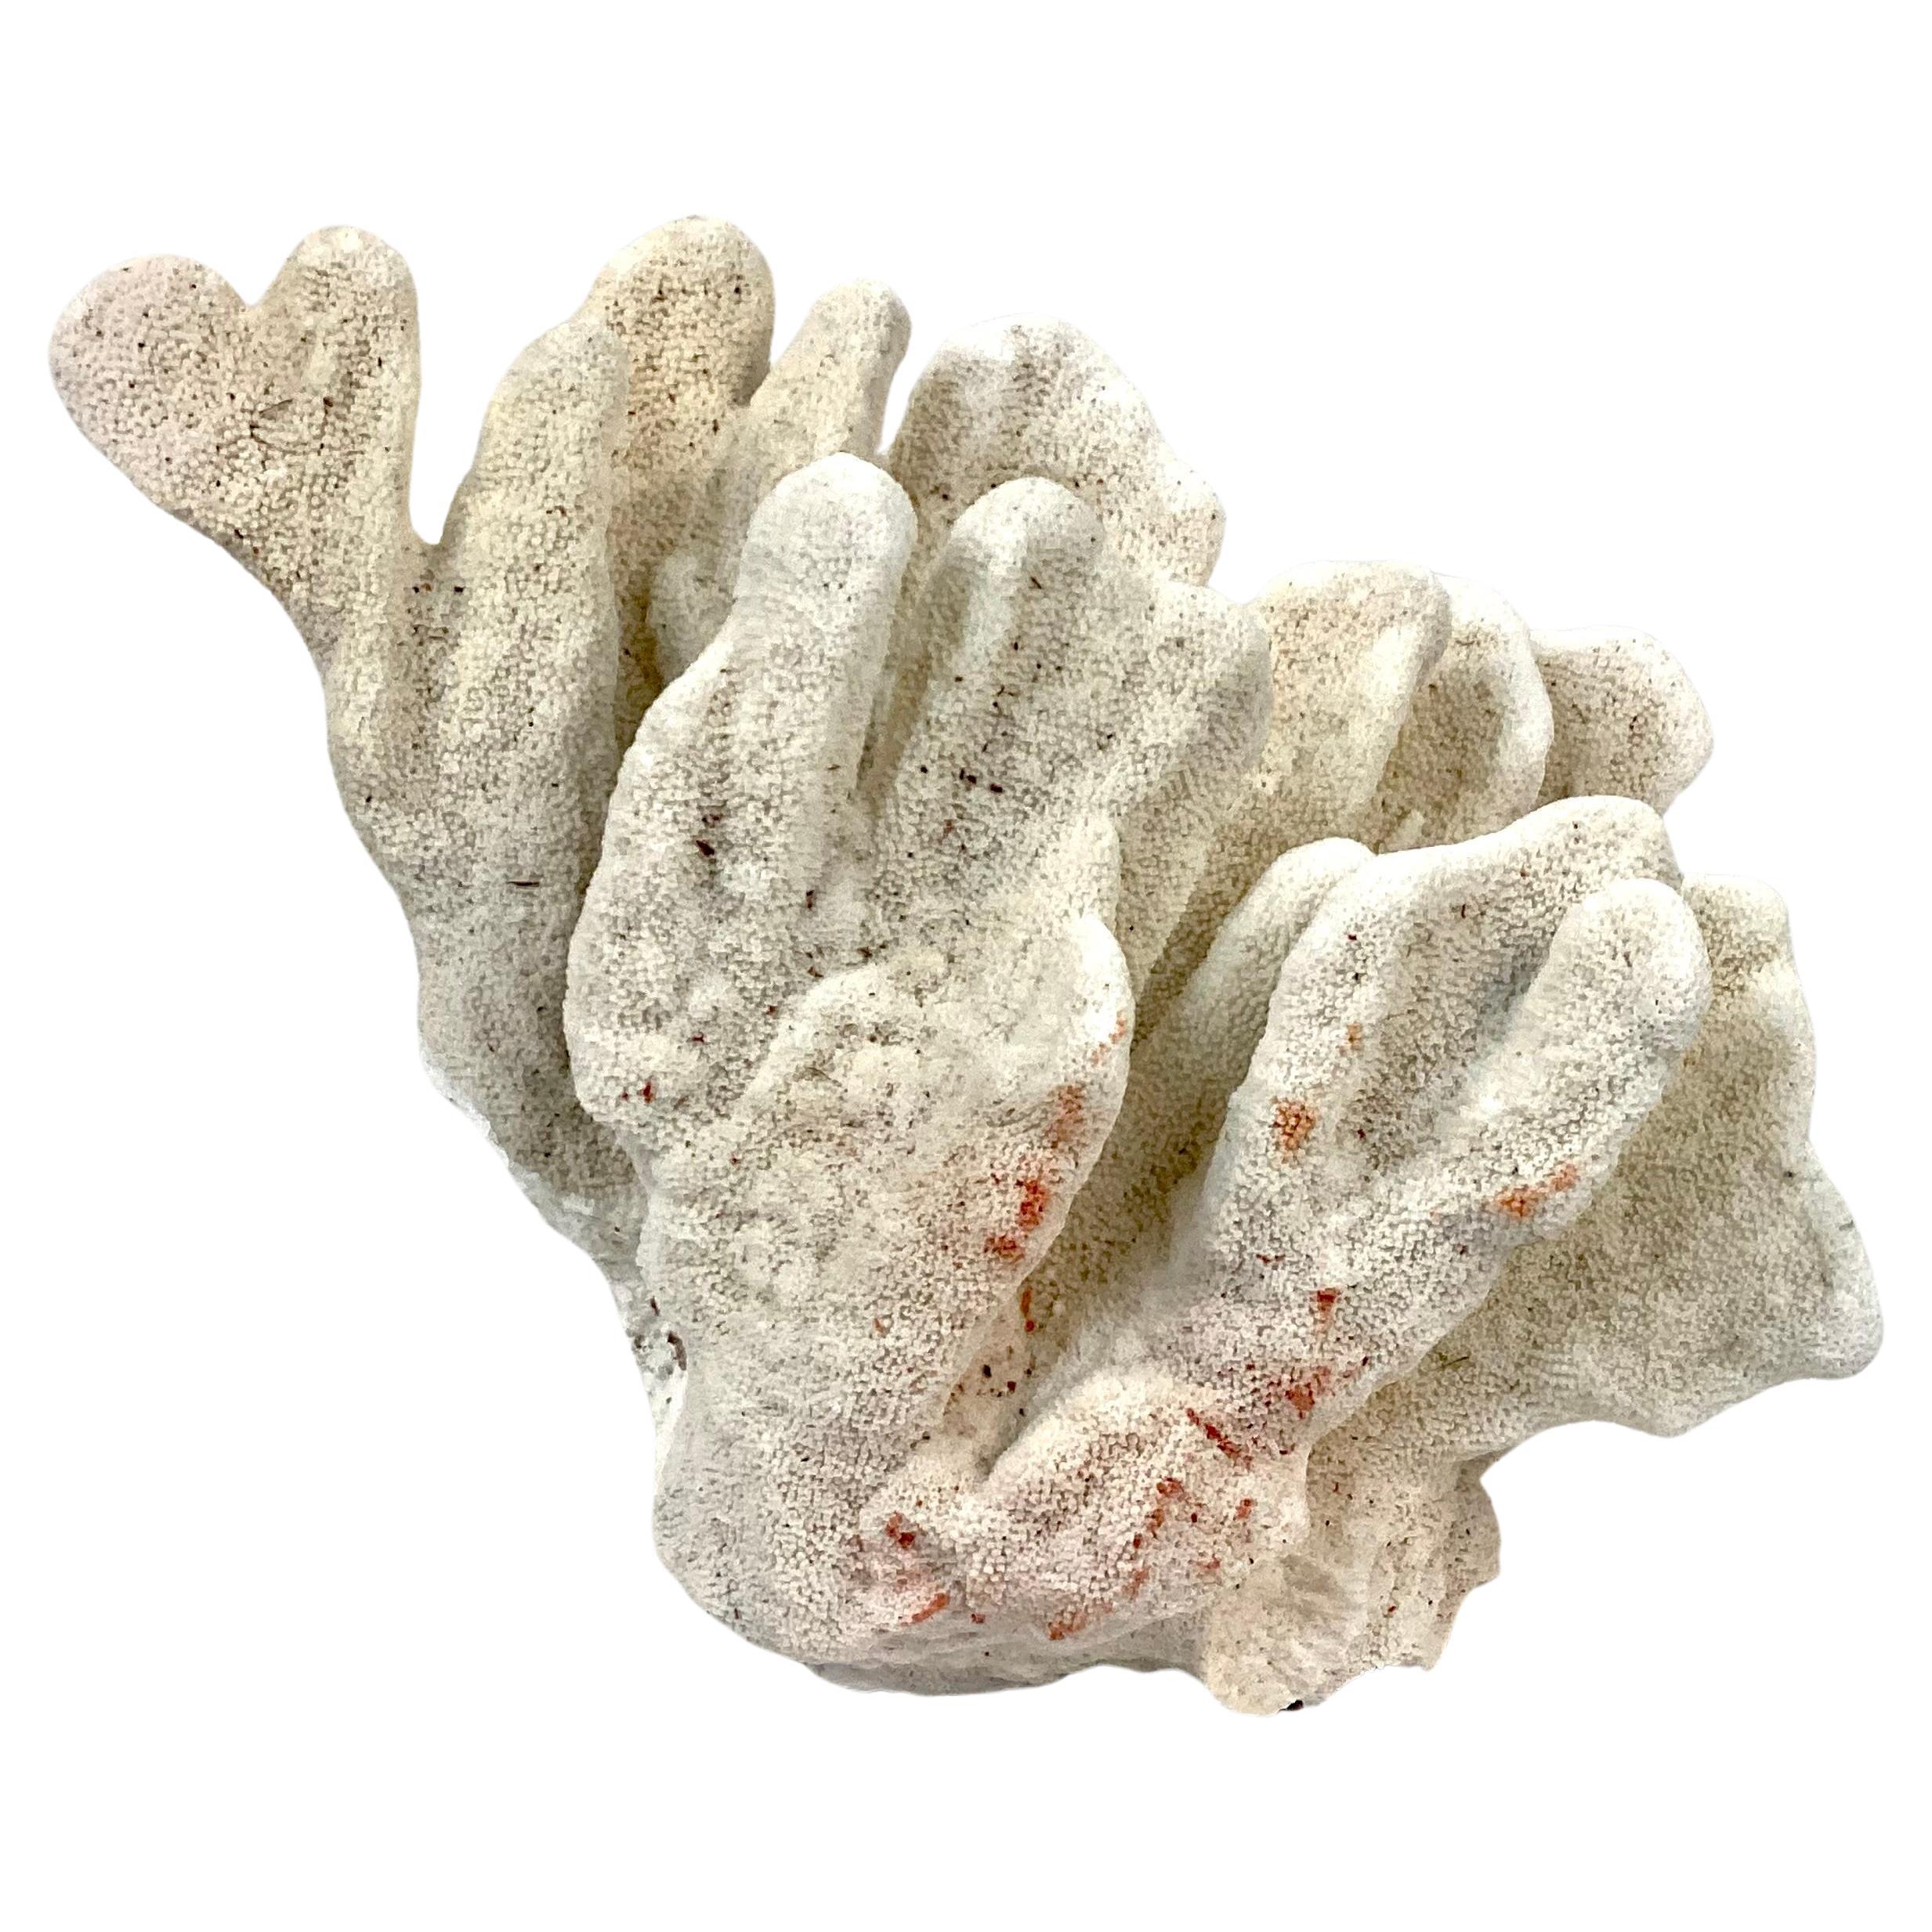 Large Natural White Coral Reef Specimen #6 For Sale